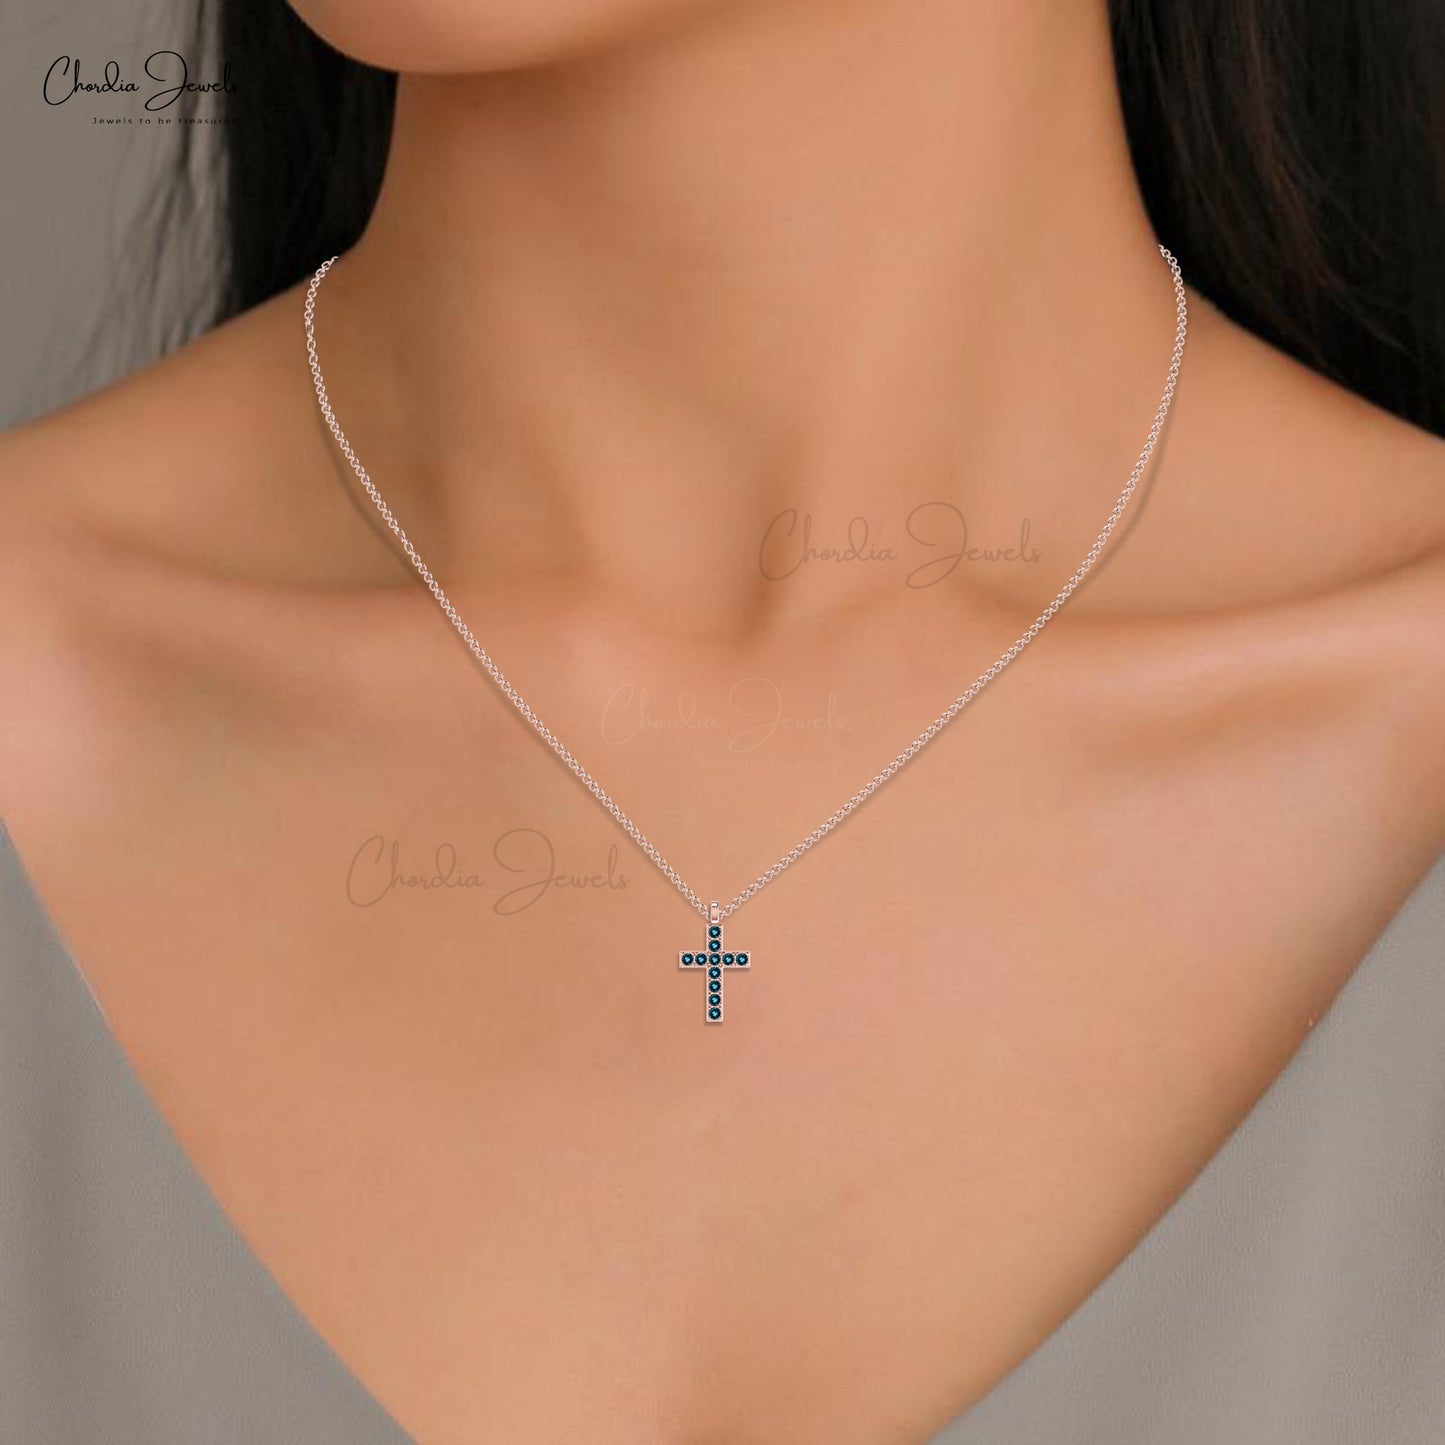 Personalized Custom Religious Pendant Genuine London Blue Topaz Gemstone Cross Pendant Necklace 14k Real Gold Jewelry For Birthday Gift